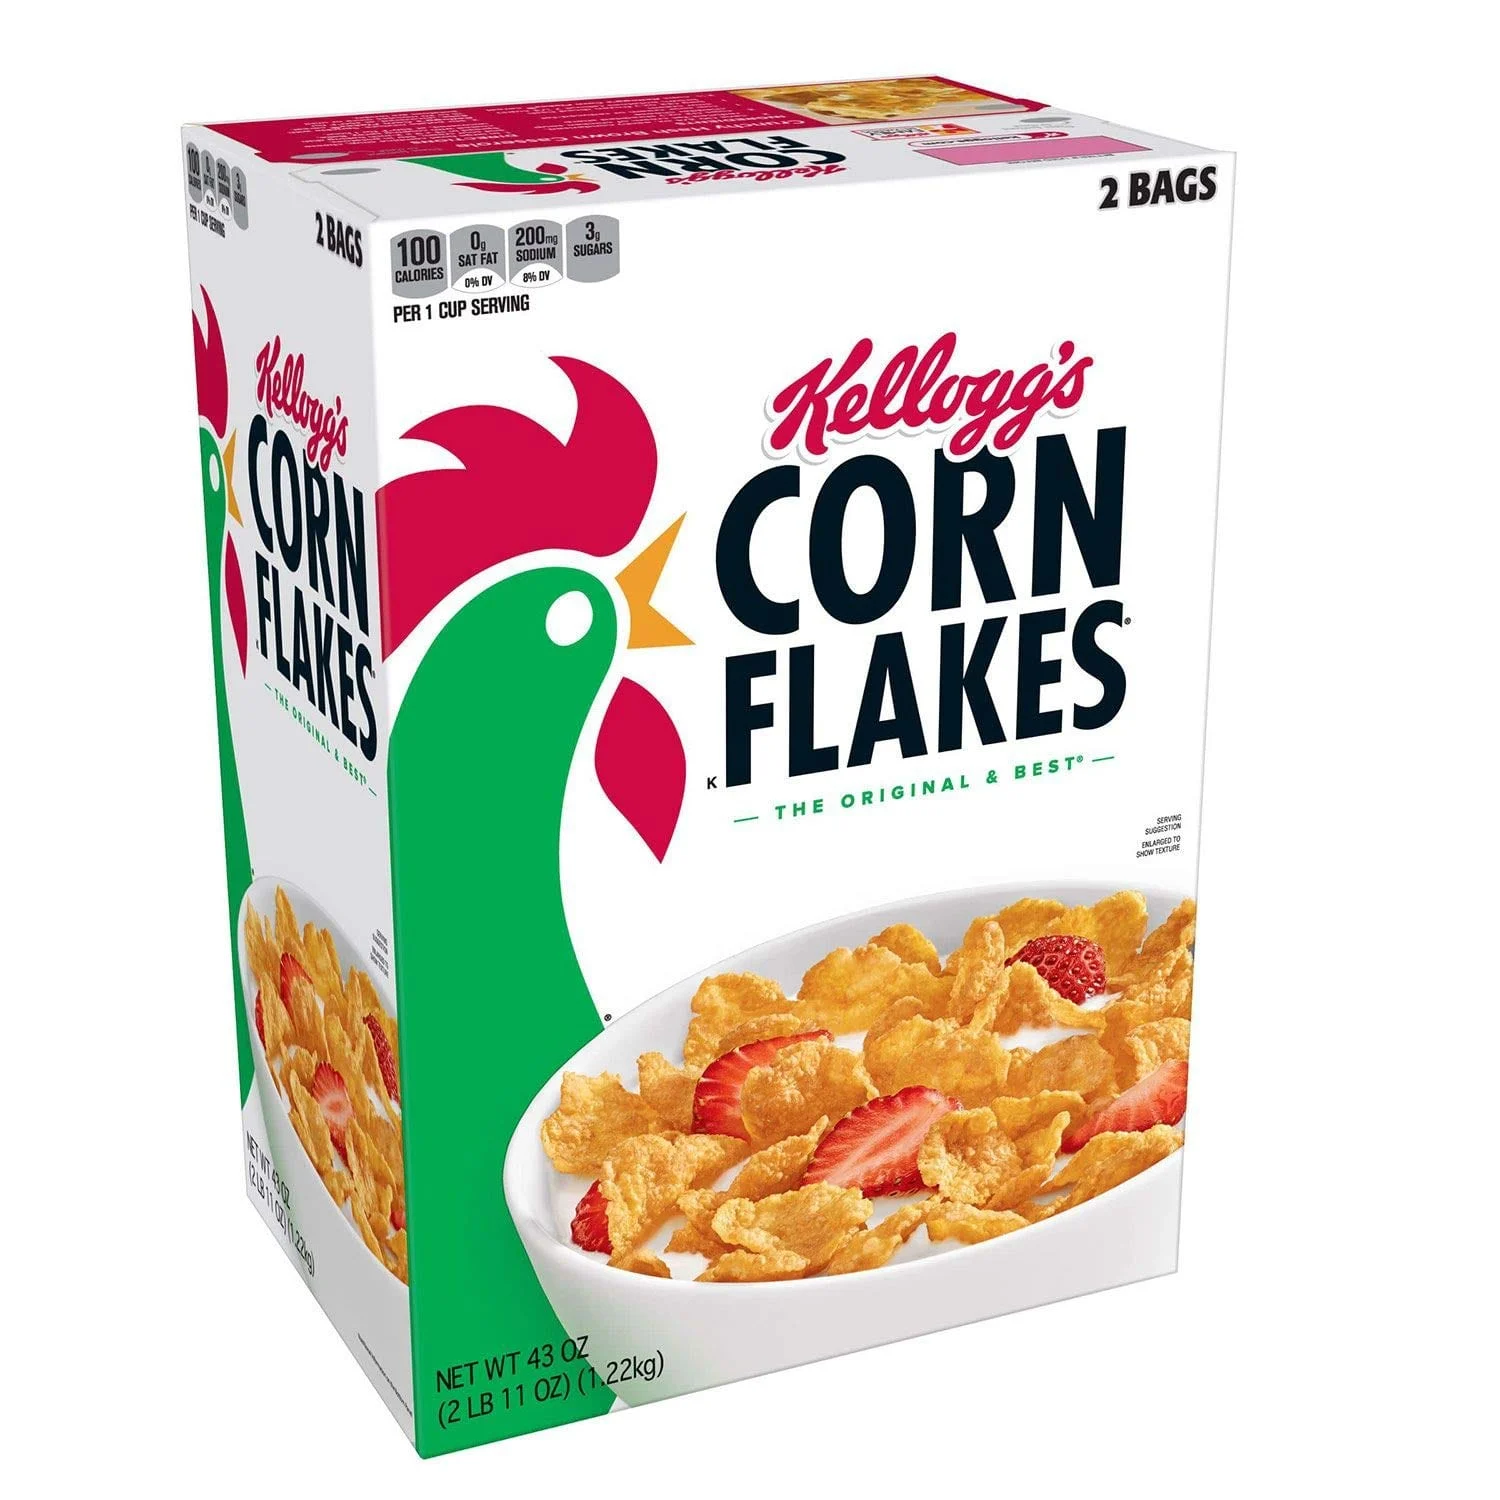 Kellogg's Corn Flakes
